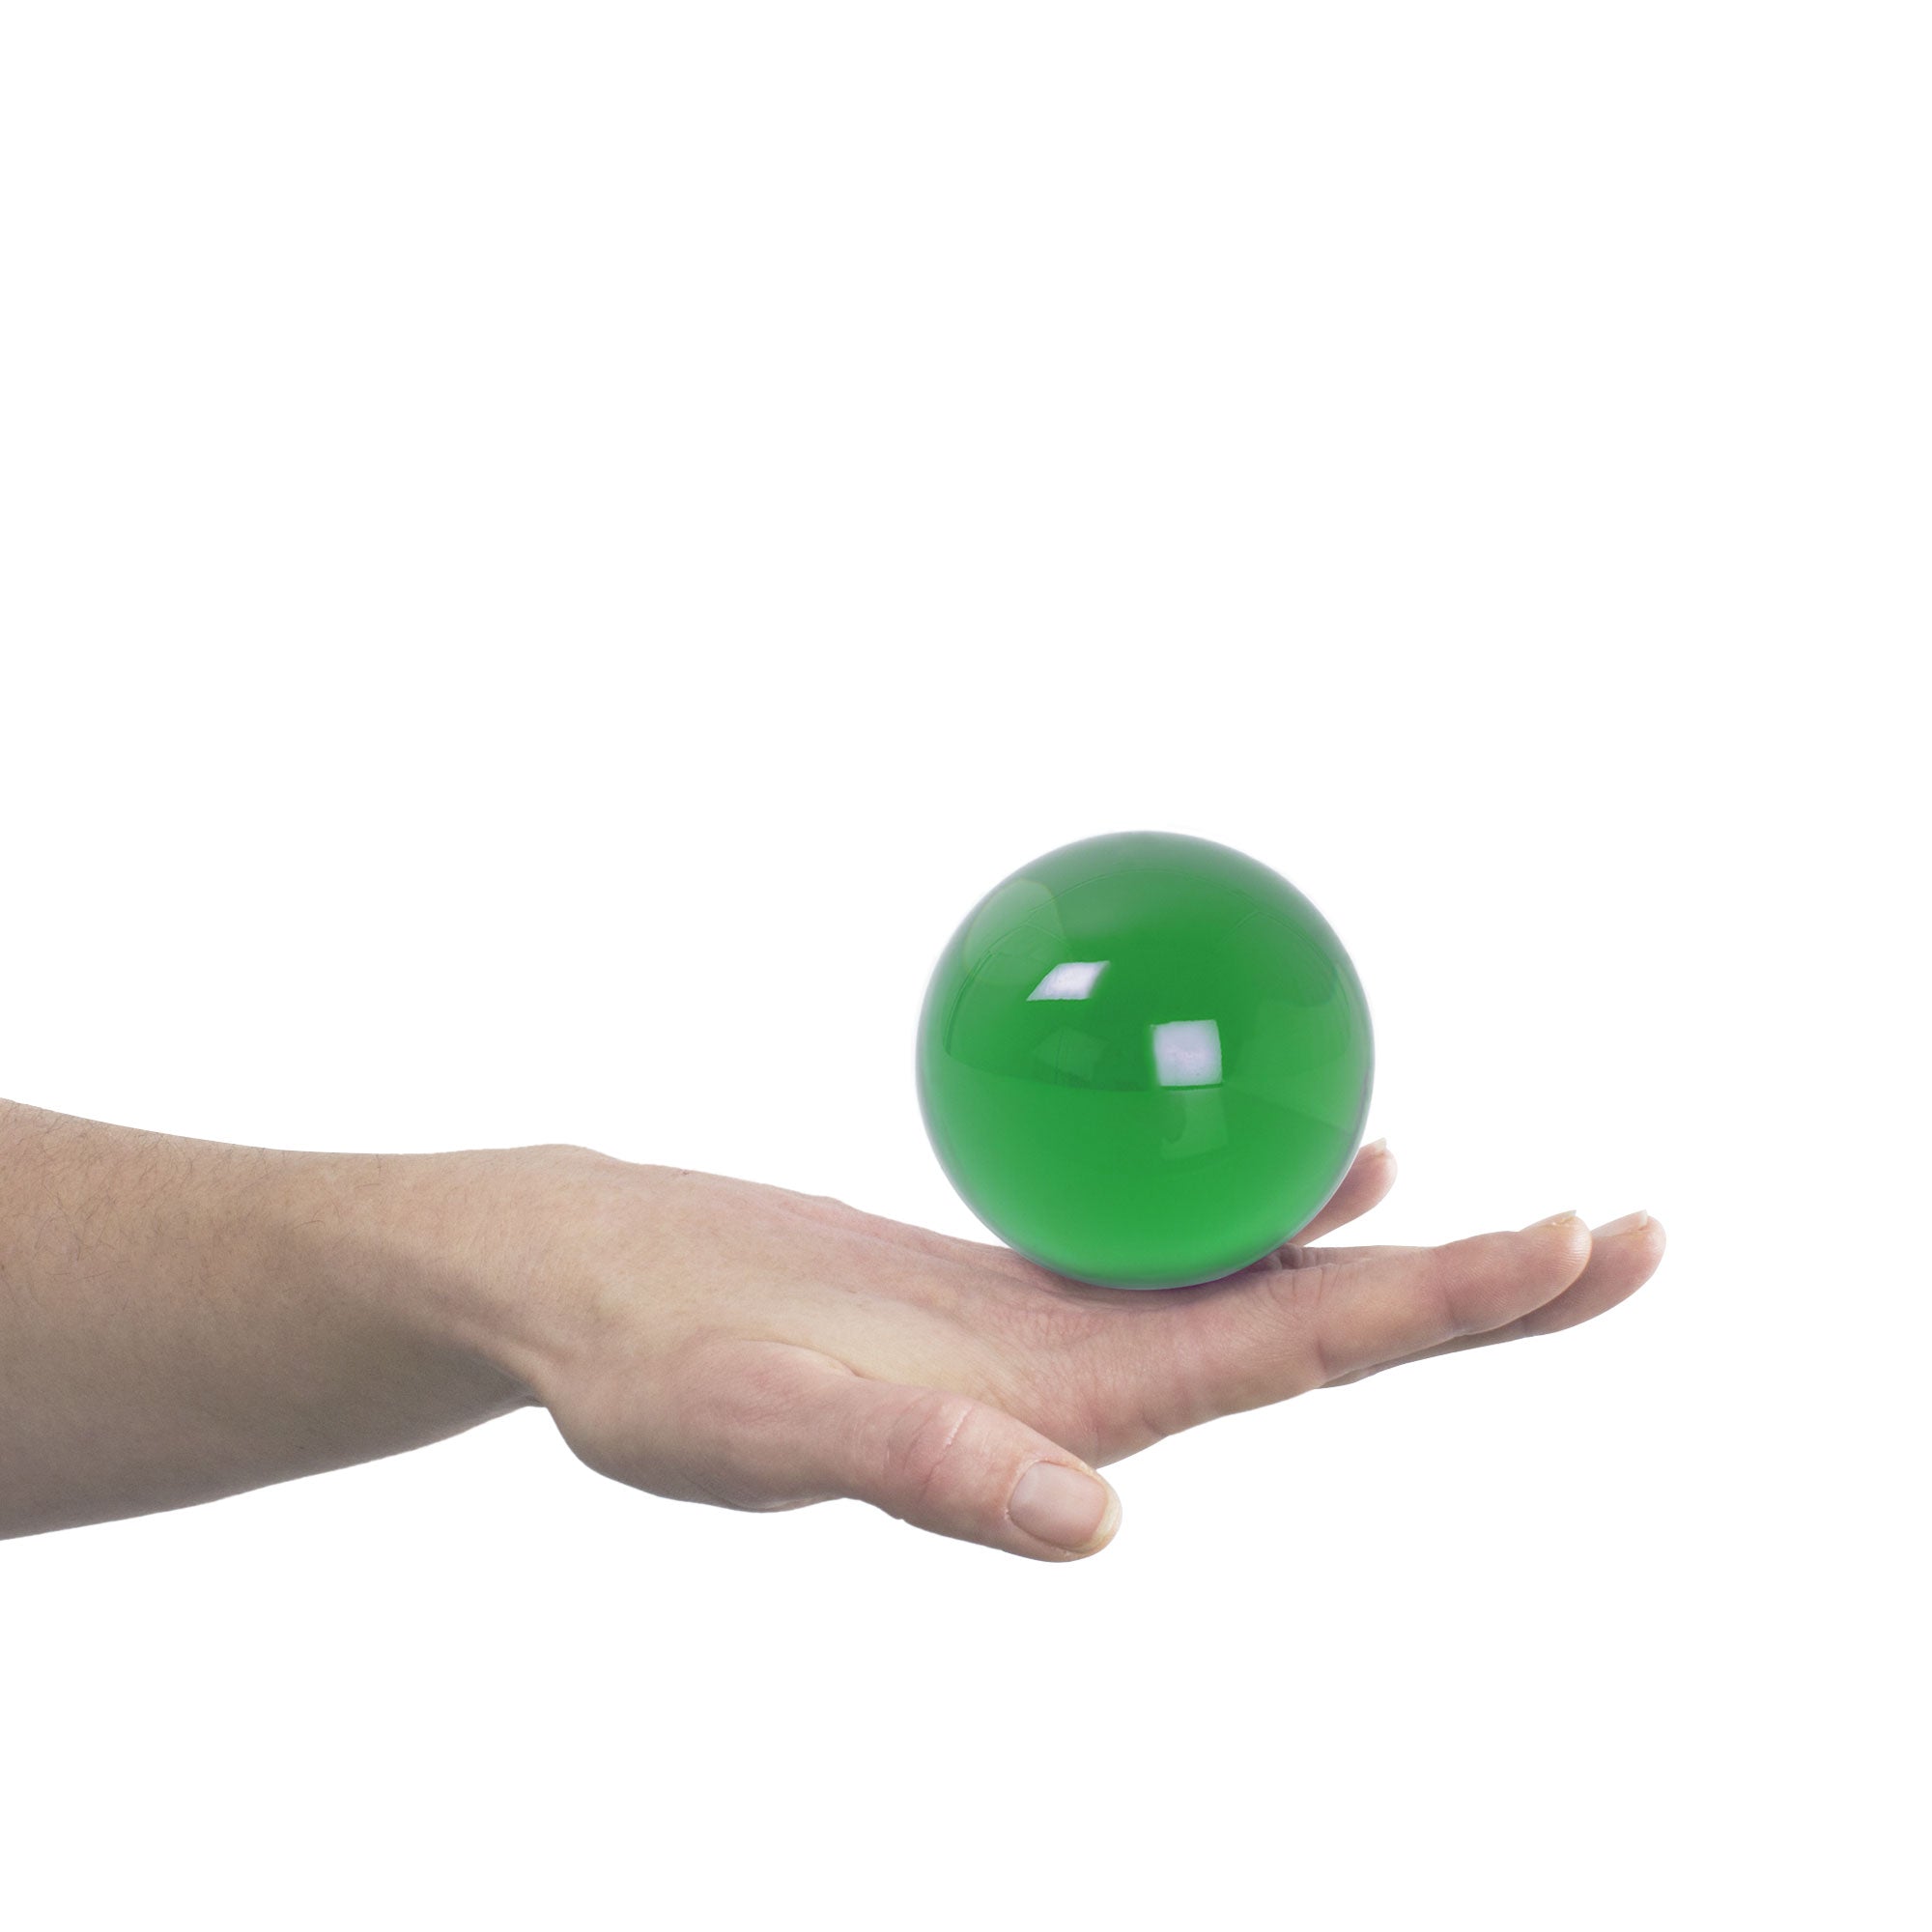 75mm green contact ball balanced on hand